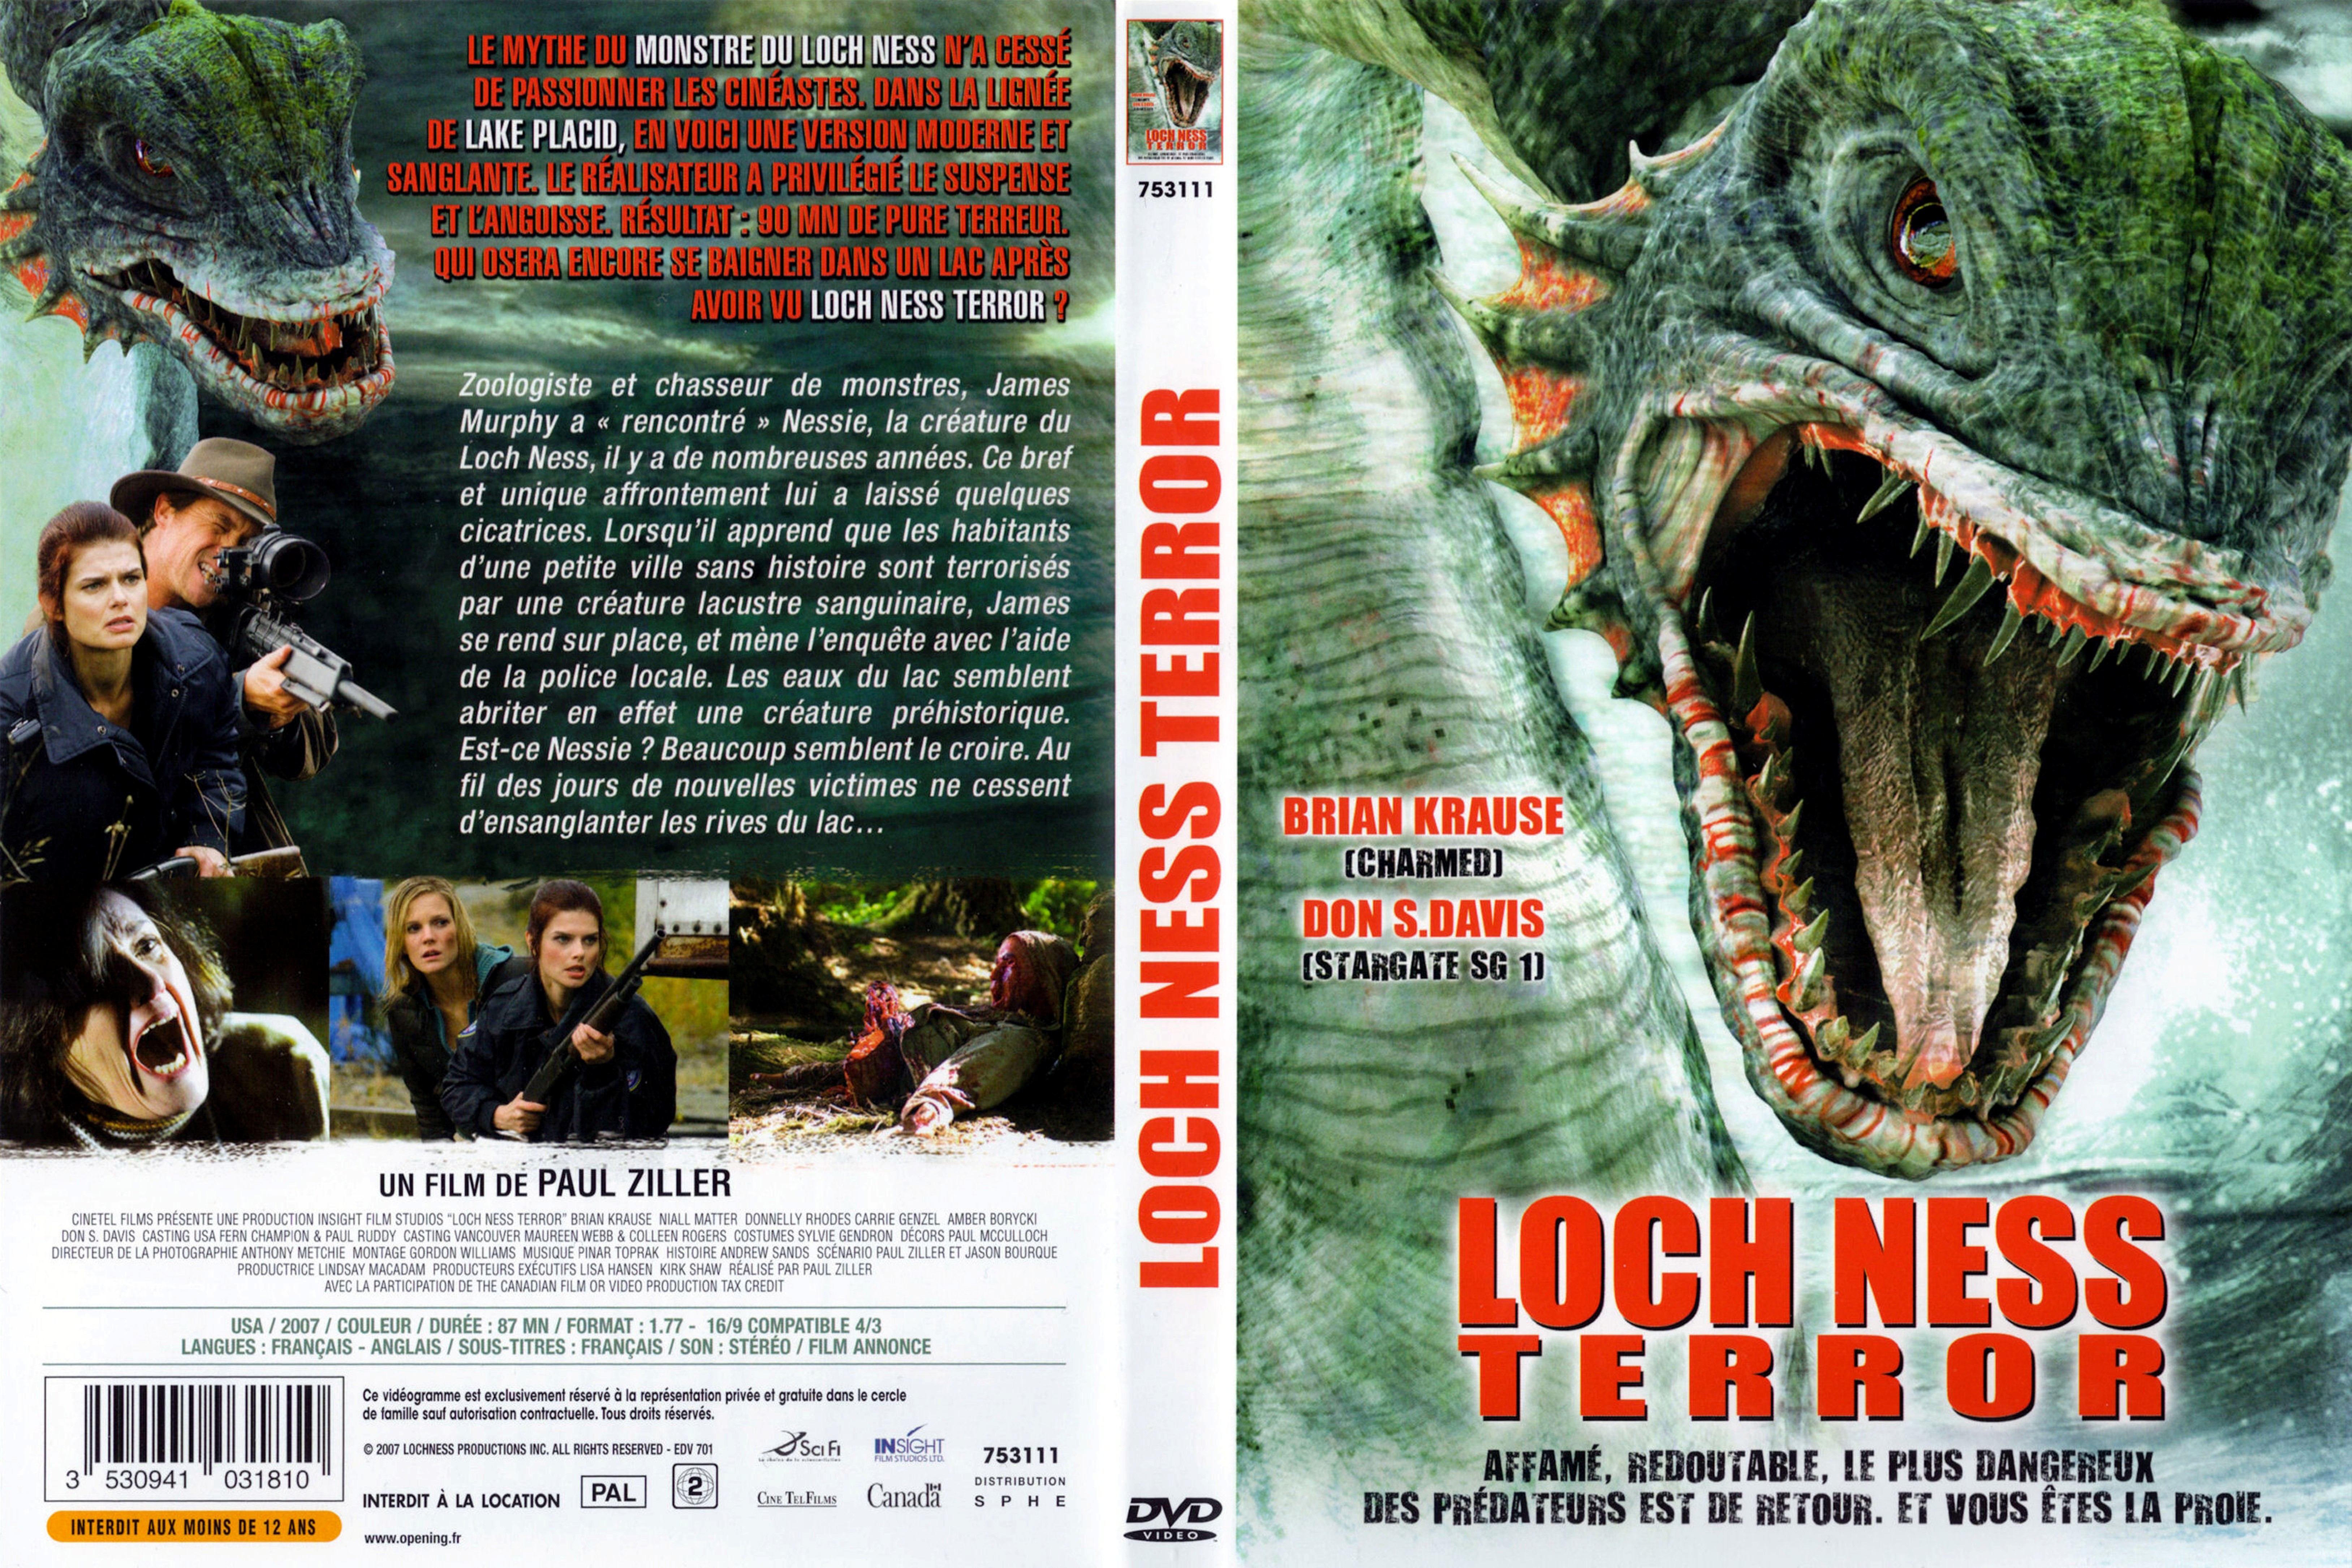 Jaquette DVD Loch Ness terror